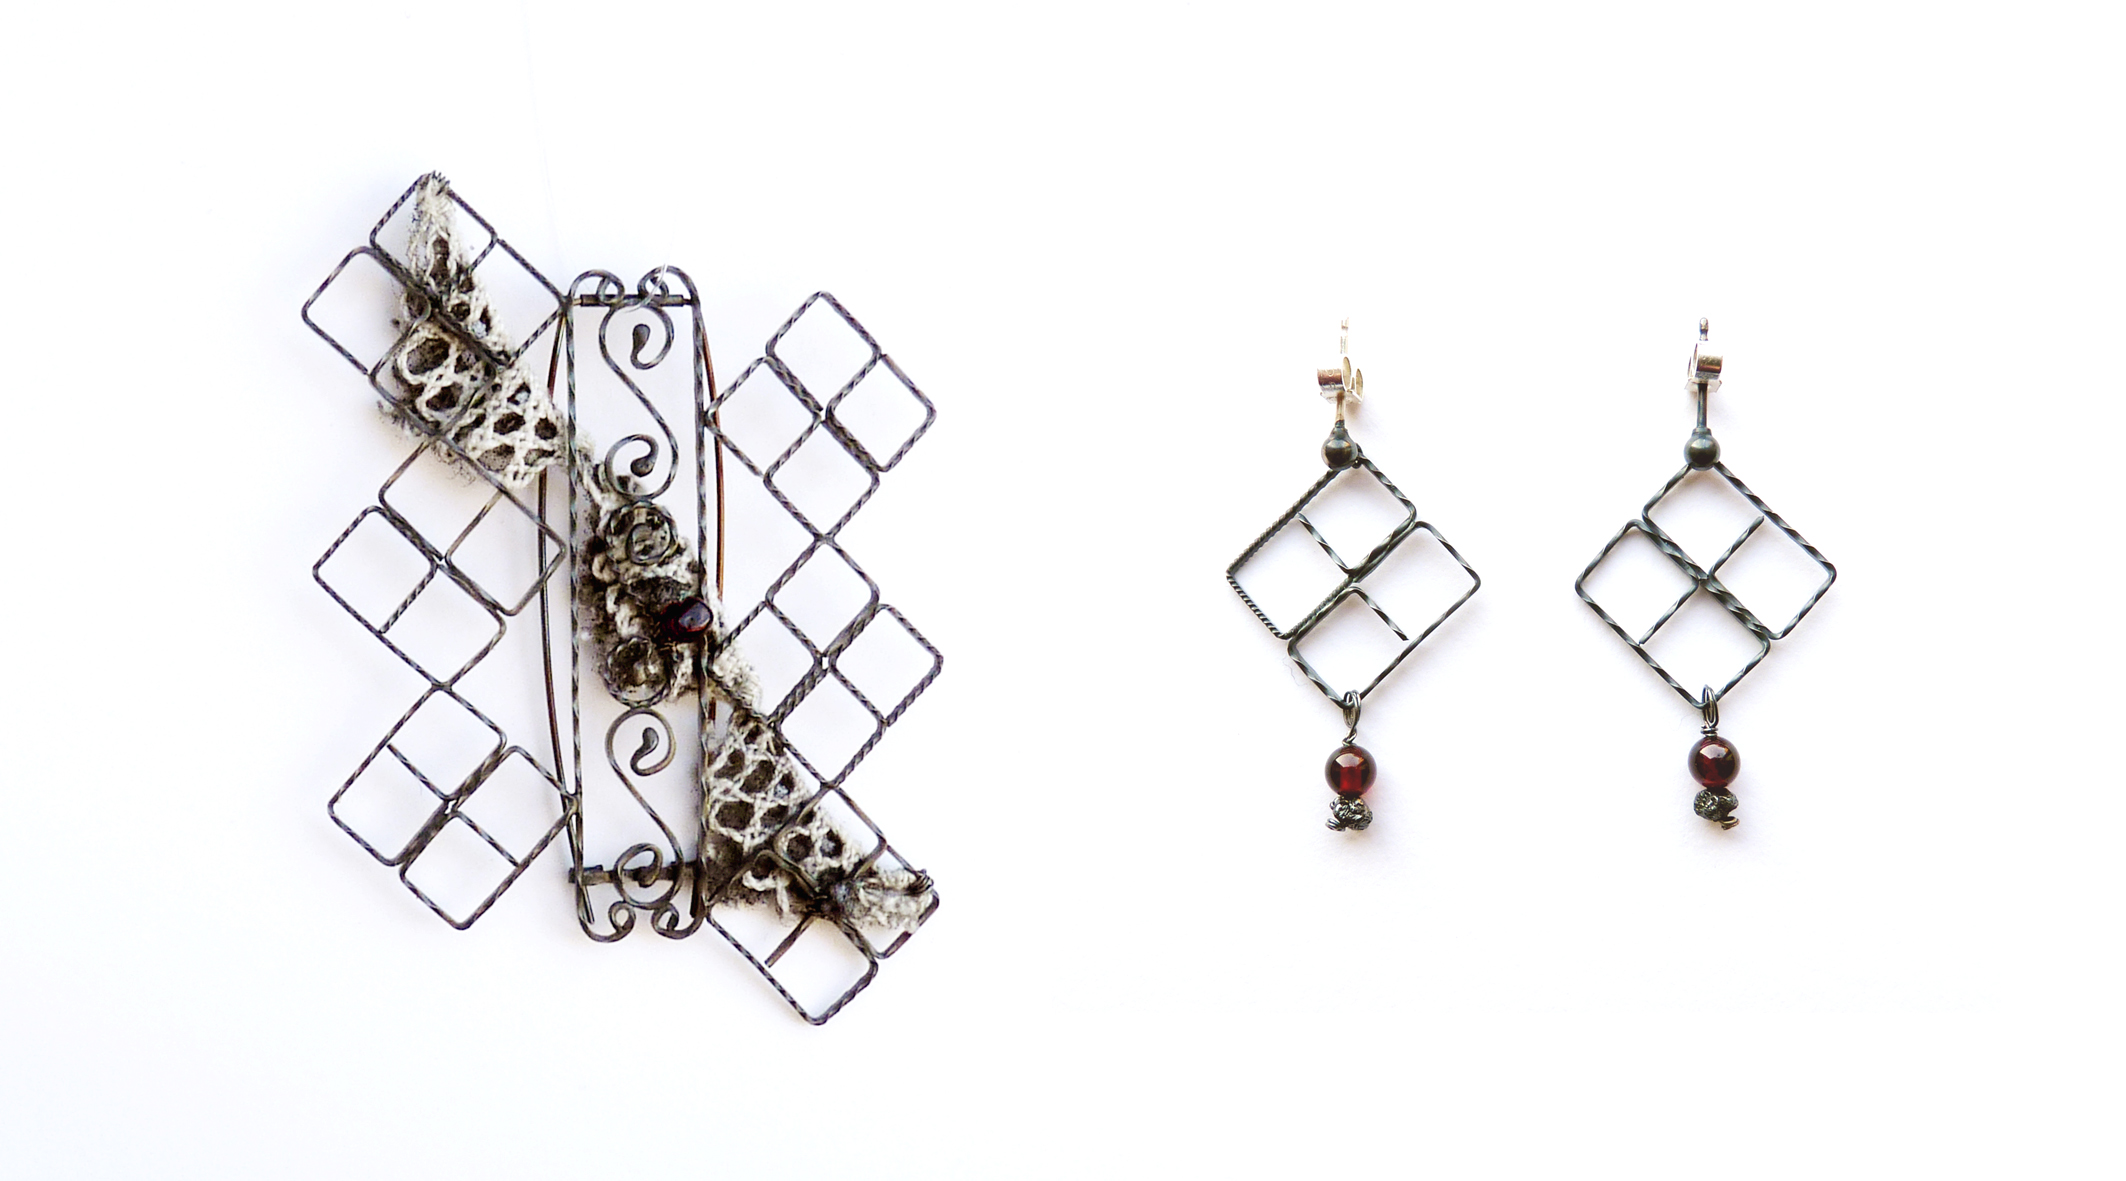  Cross Railings Brooch and Earrings -  oxidised silver, garnet, rough diamond, vintage lace. 2012  